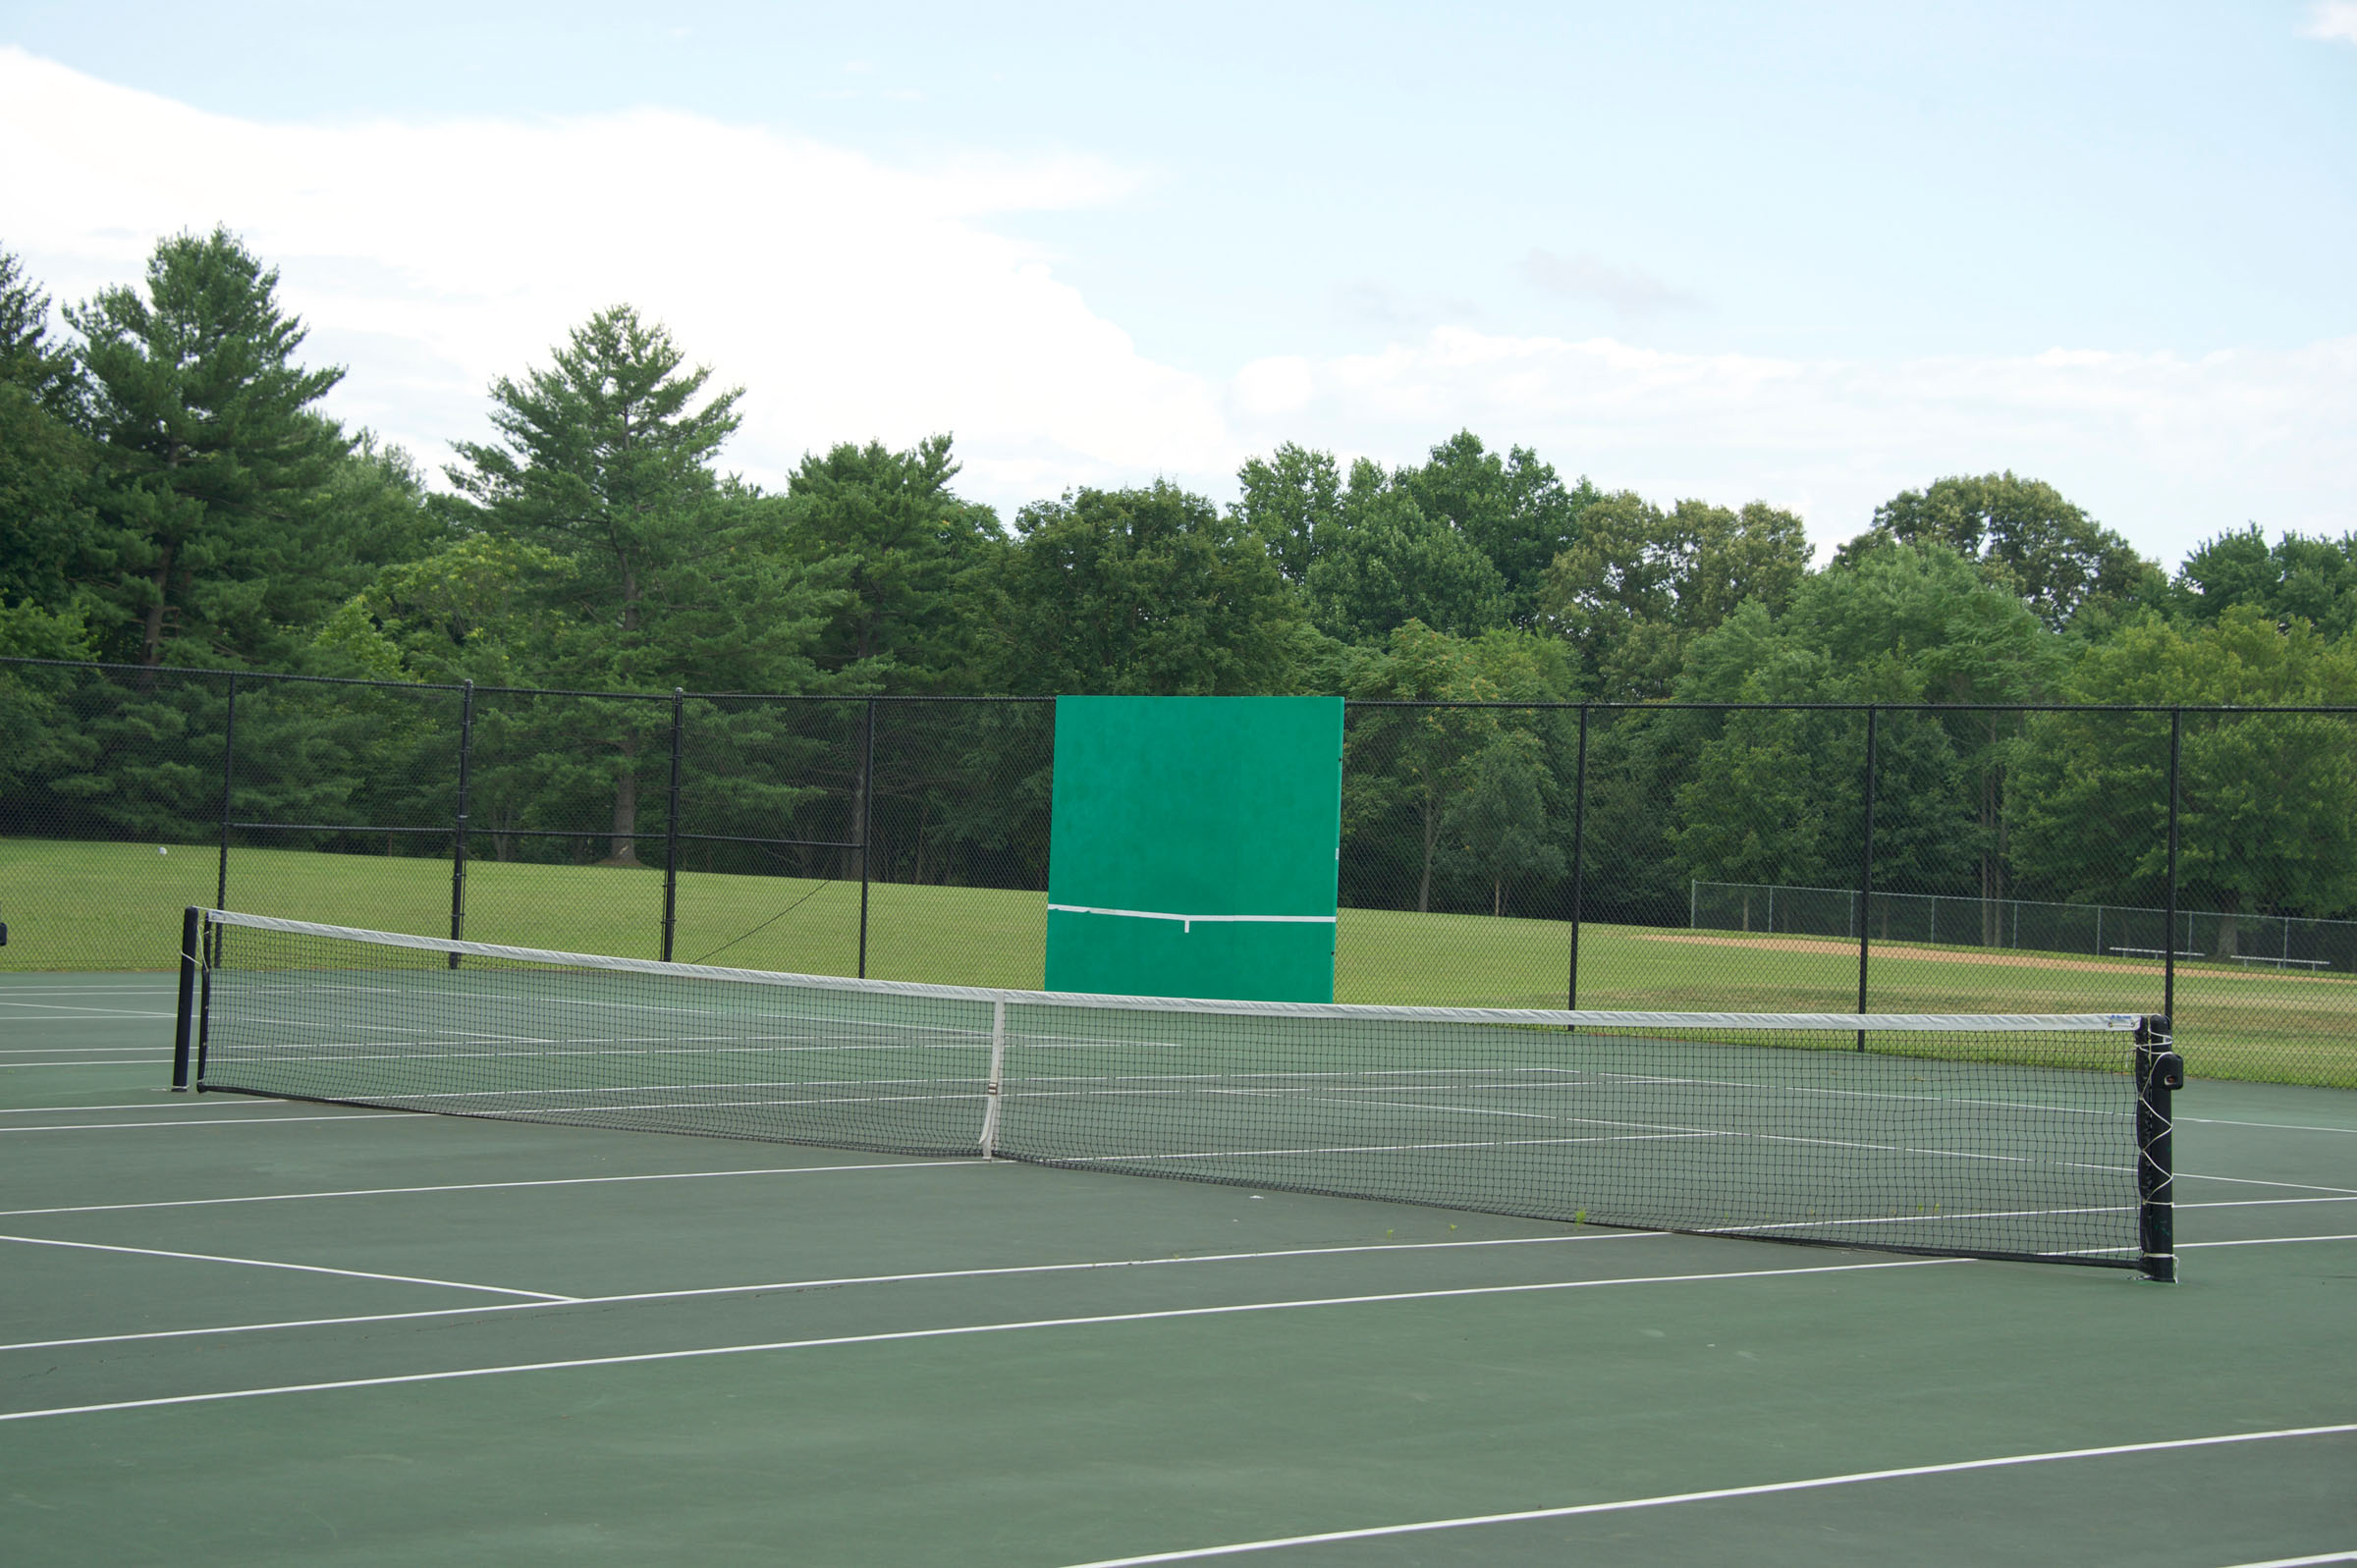 Tennis Court at Layhill Village Local Park